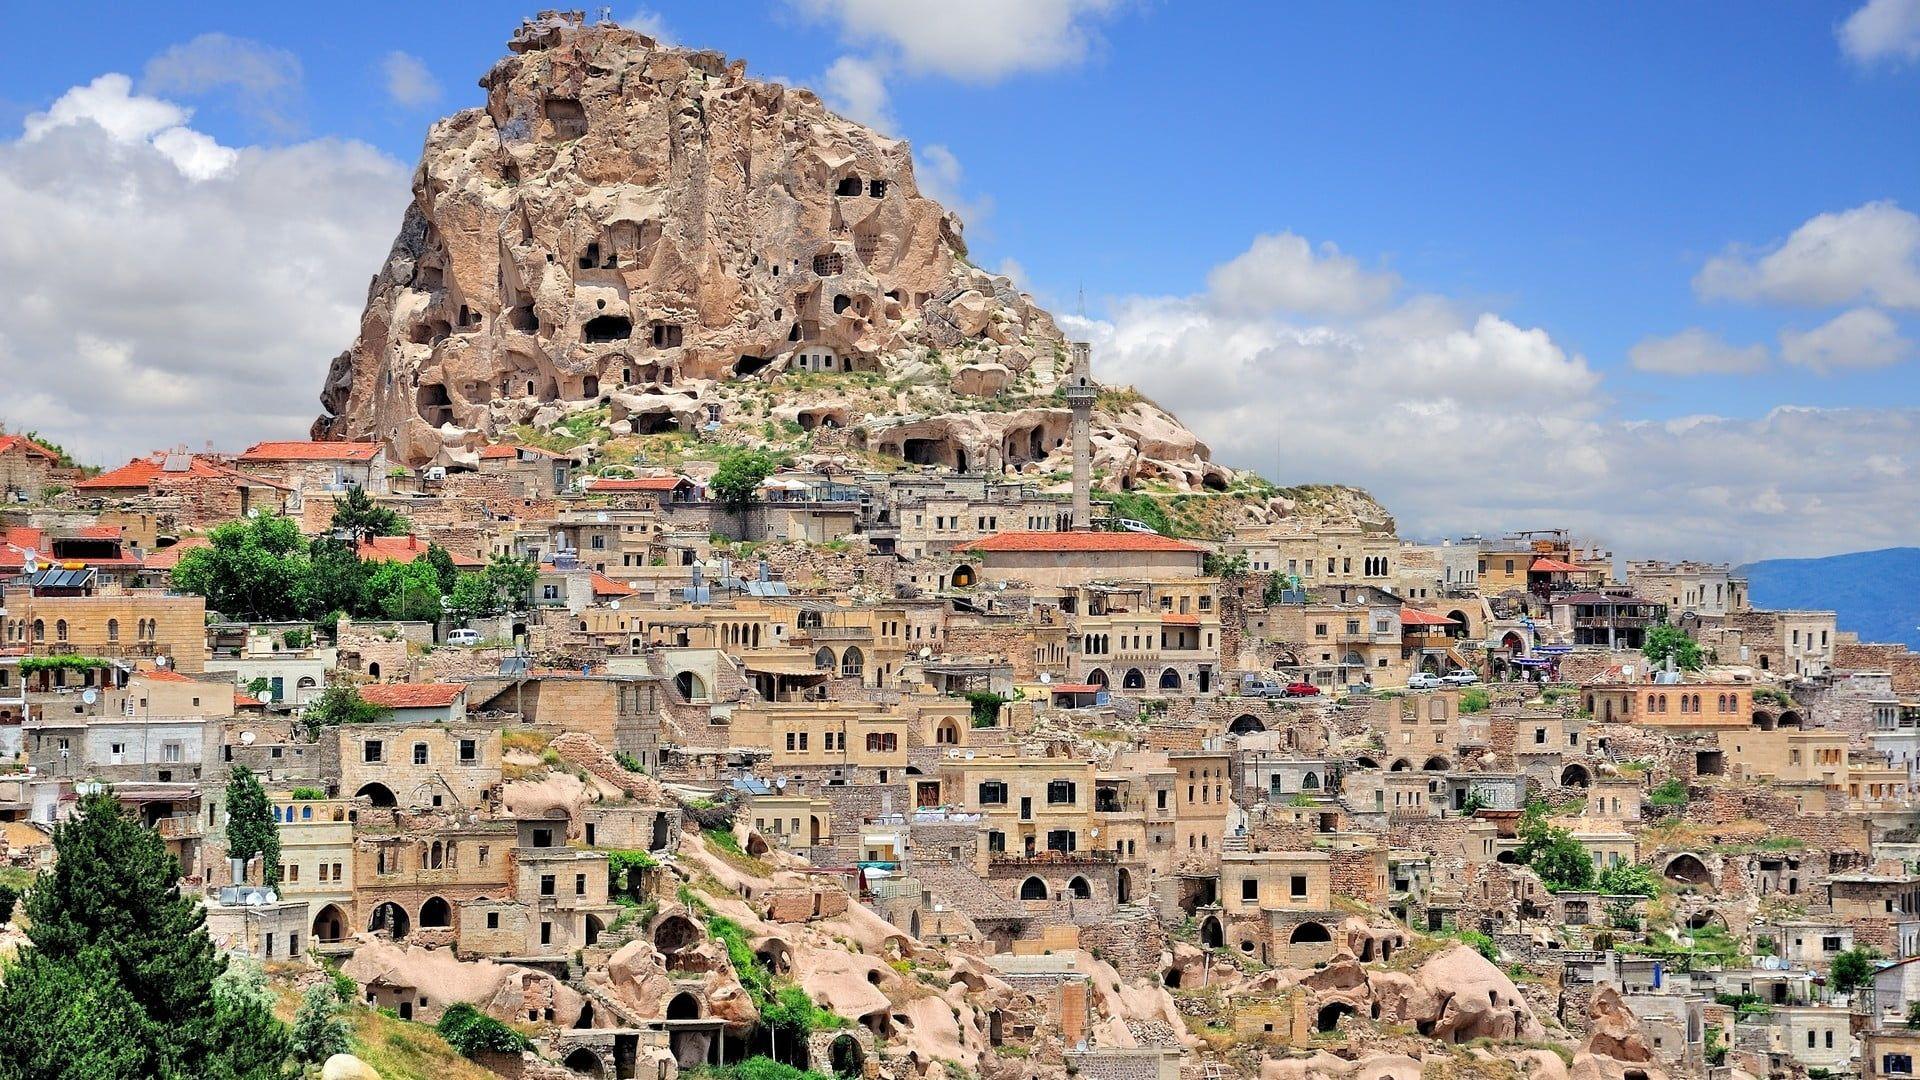 Brown villages near to rock mountain, Turkey, Cappadocia, city